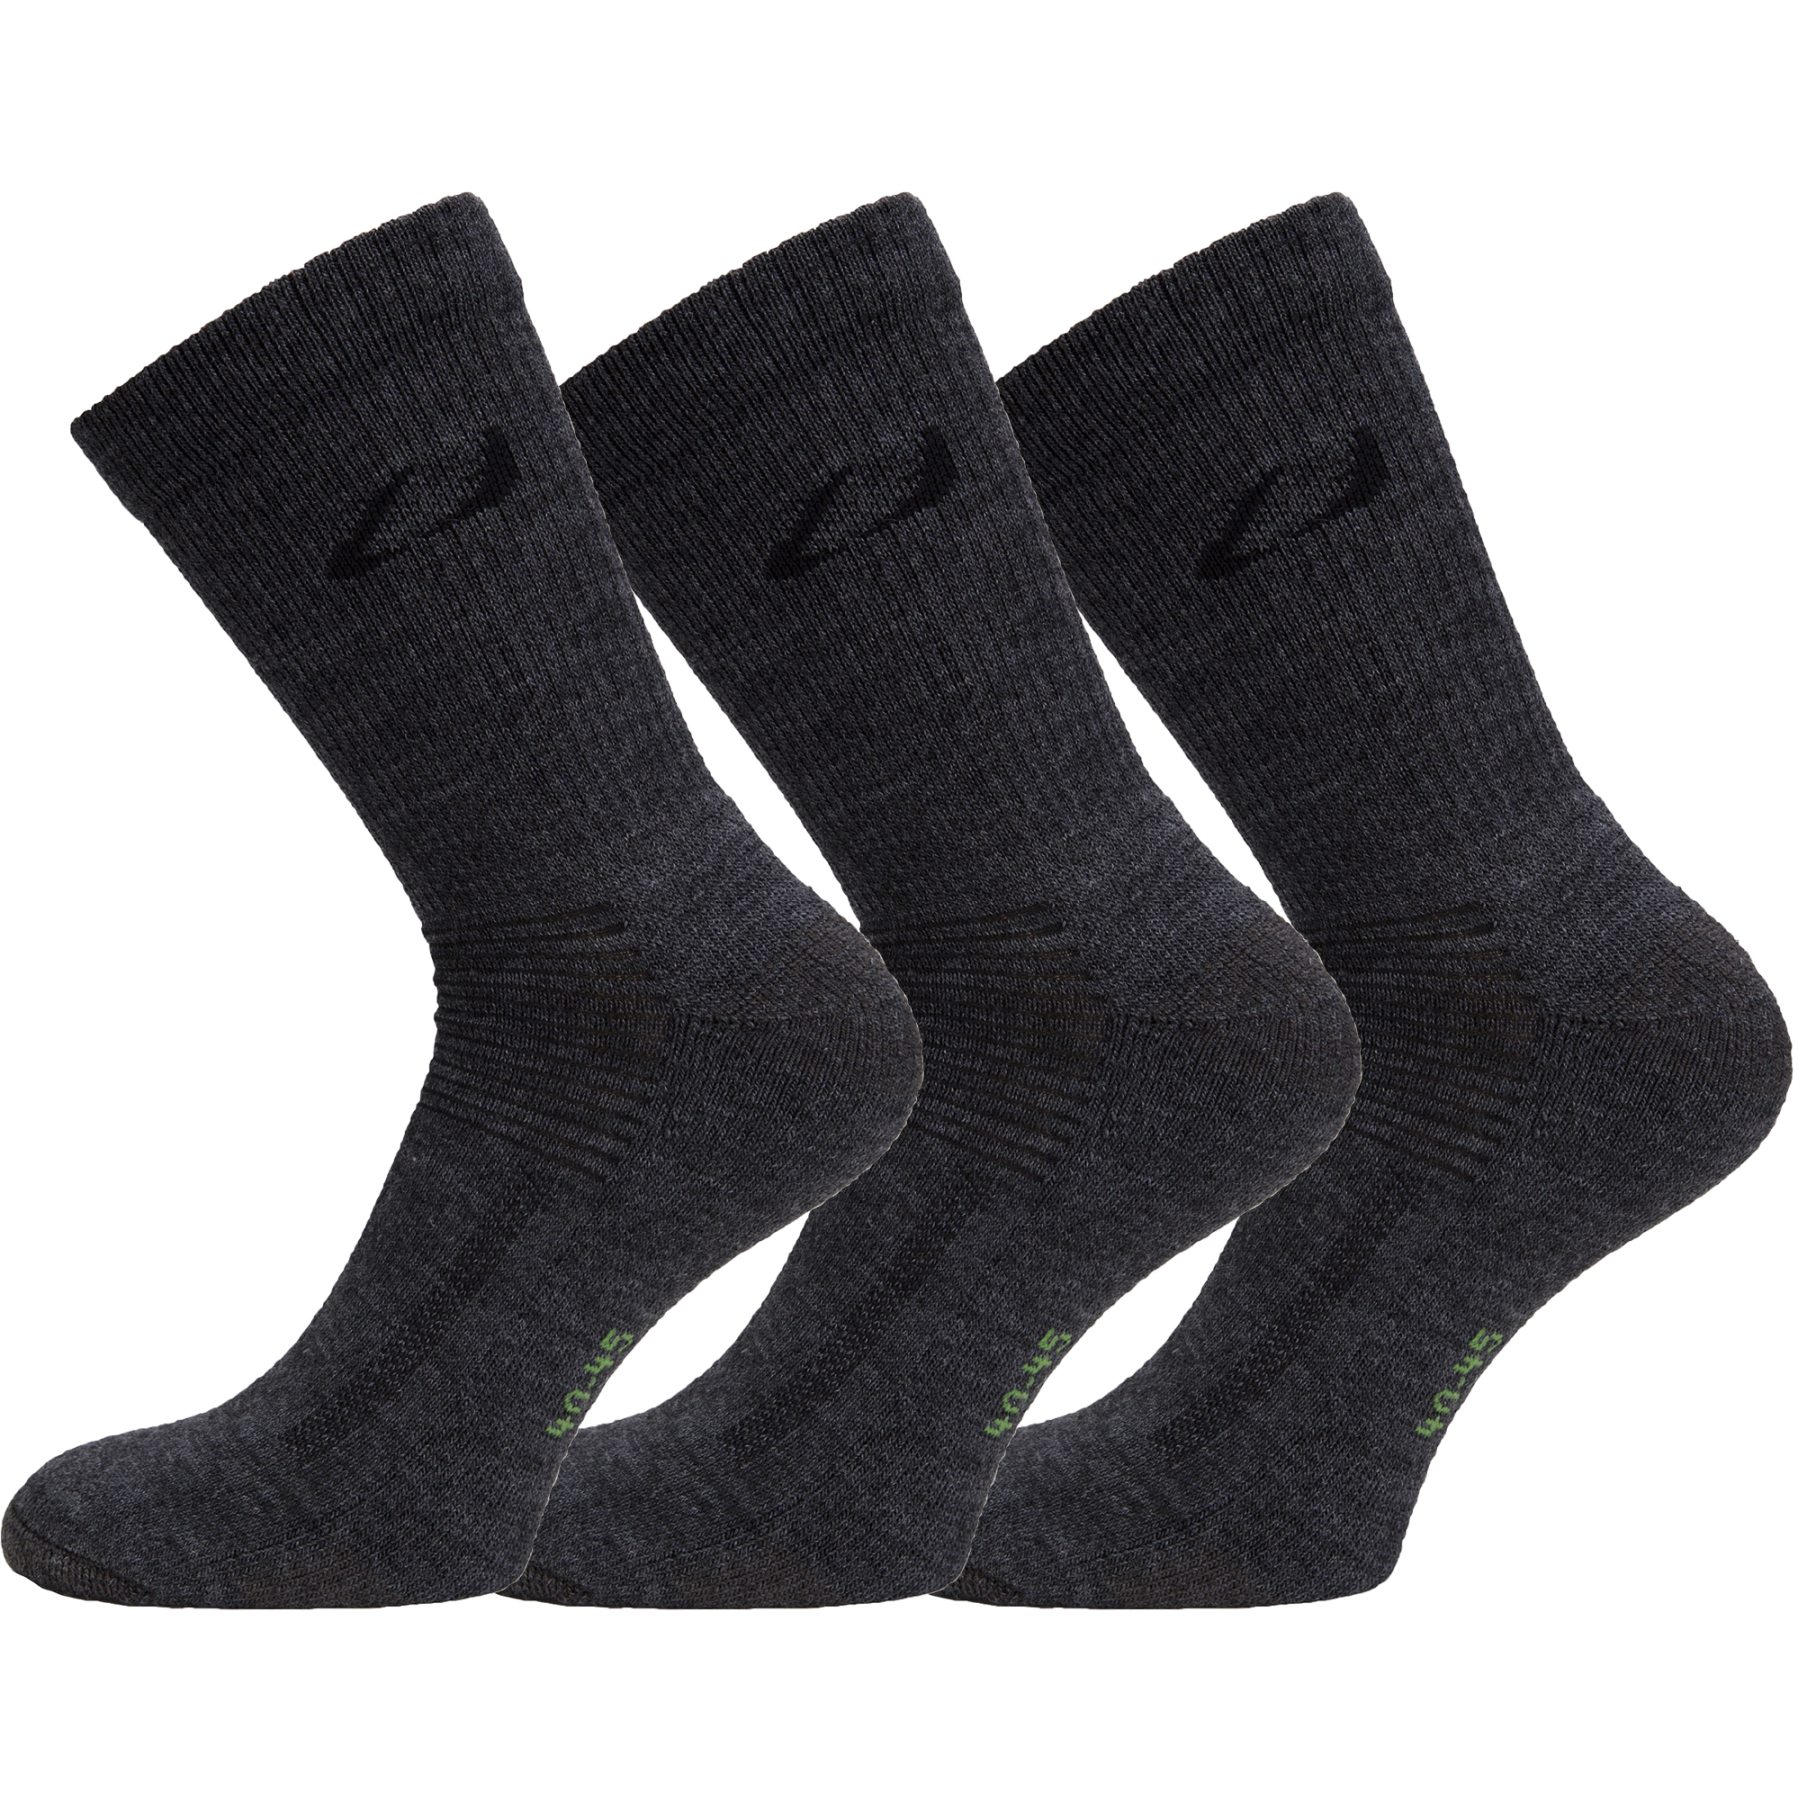 Picture of Ulvang Allround Socks 3 Pack - Charcoal Melange